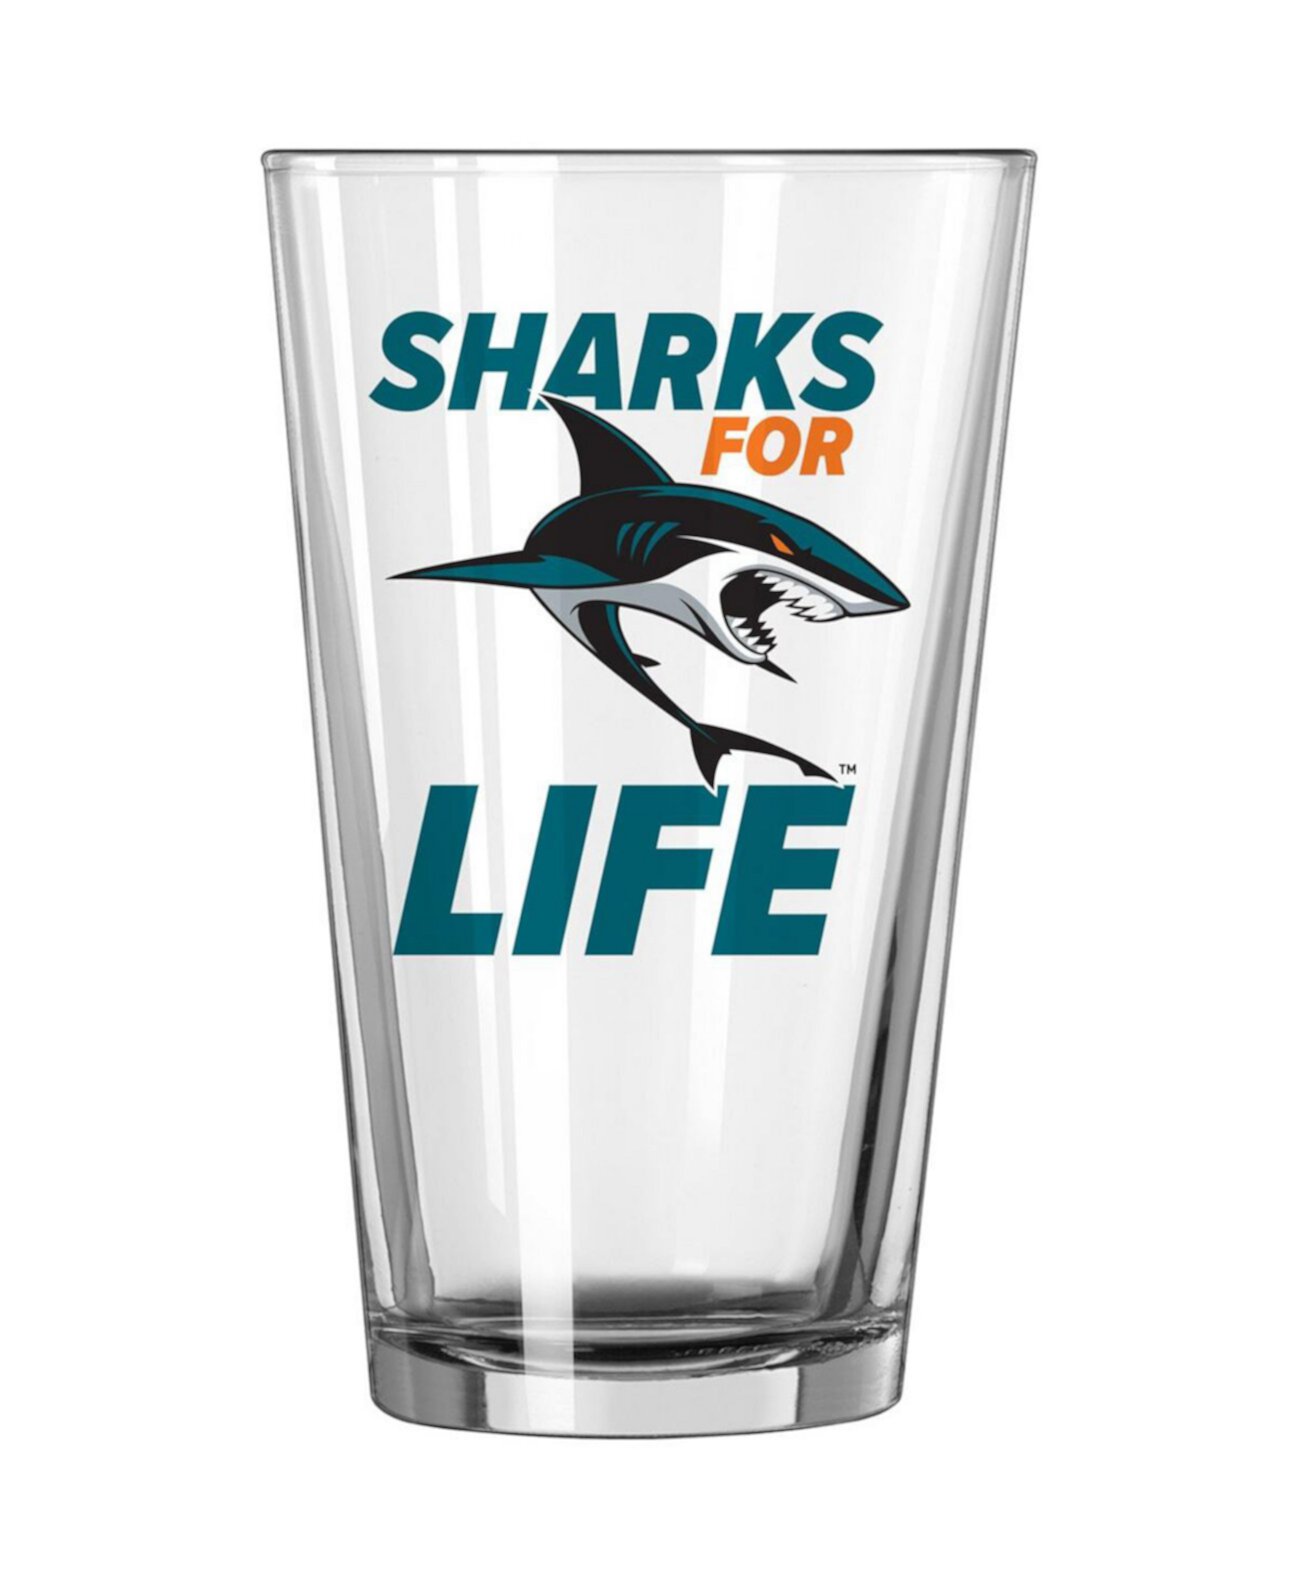 Стакан с надписью команды San Jose Sharks, 16 унций, пинта Logo Brand